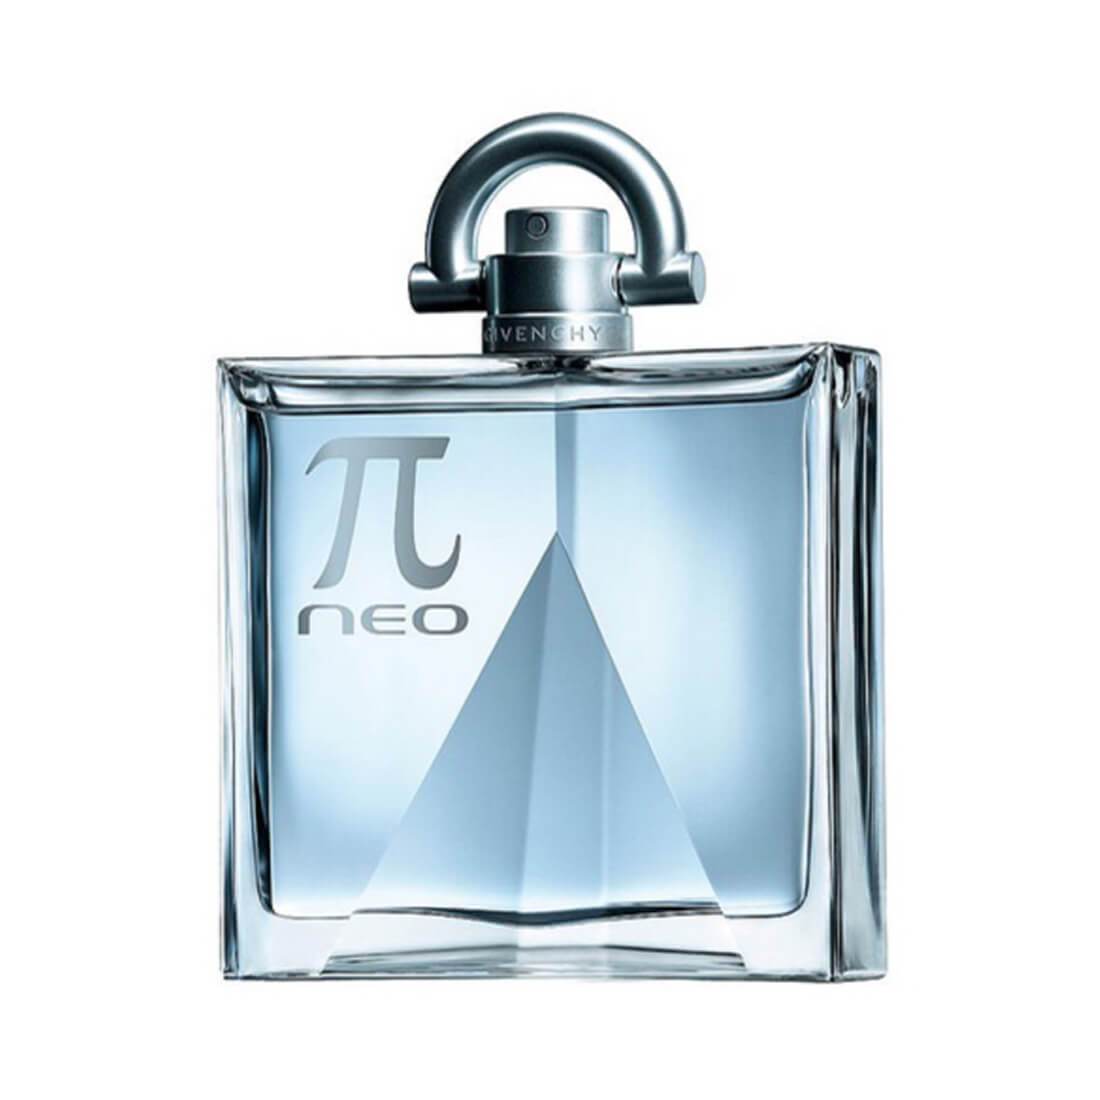 Givenchy Pi Neo EDT Perfume For Men - 100ml